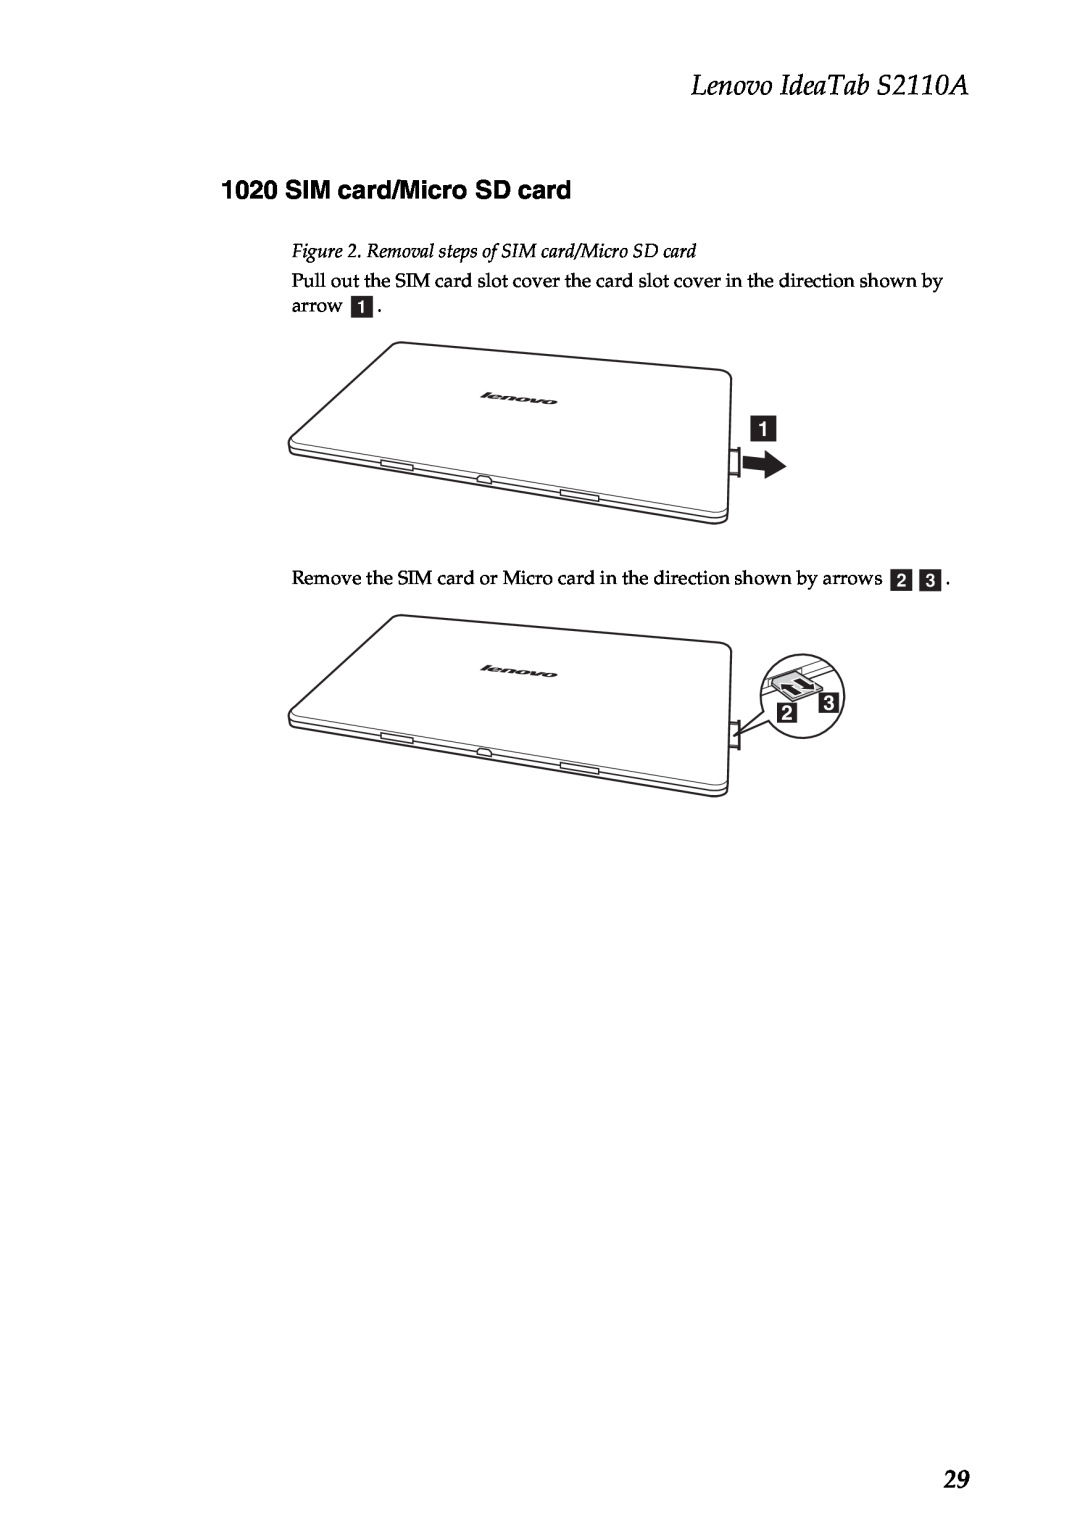 Lenovo manual Lenovo IdeaTab S2110A, Removal steps of SIM card/Micro SD card 